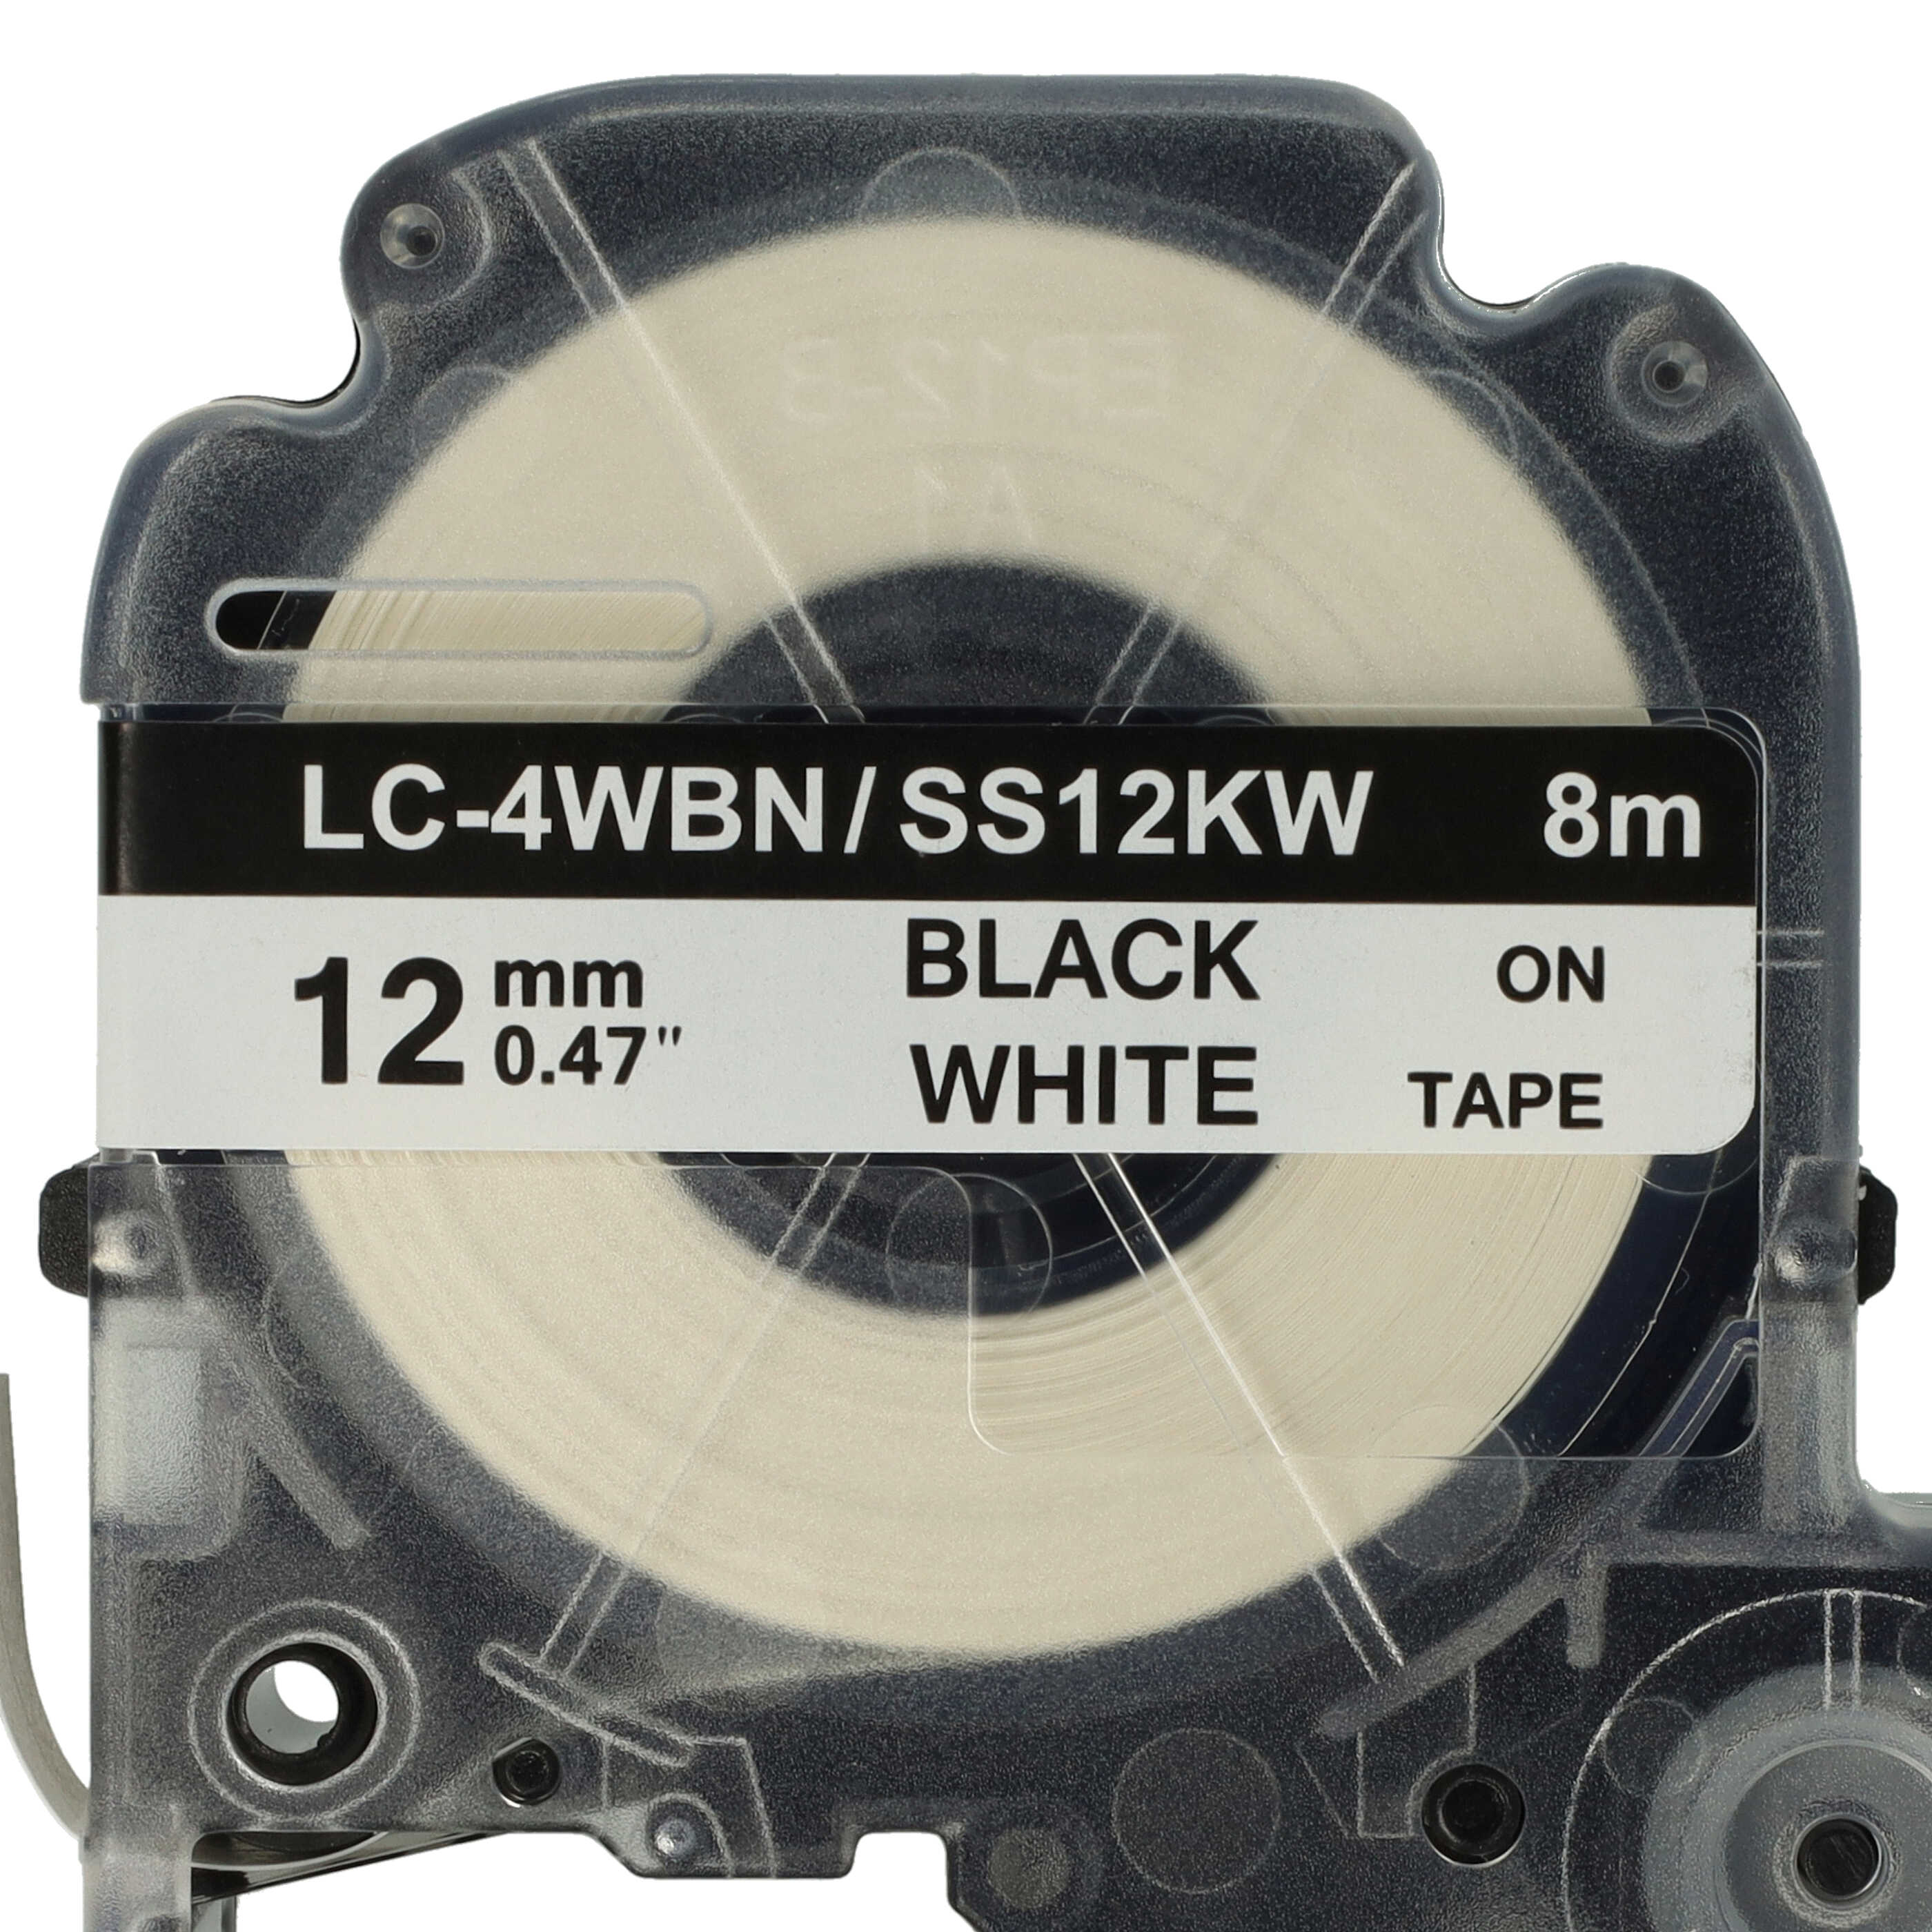 Casete cinta escritura reemplaza Epson LC-4WBN Negro su Blanco